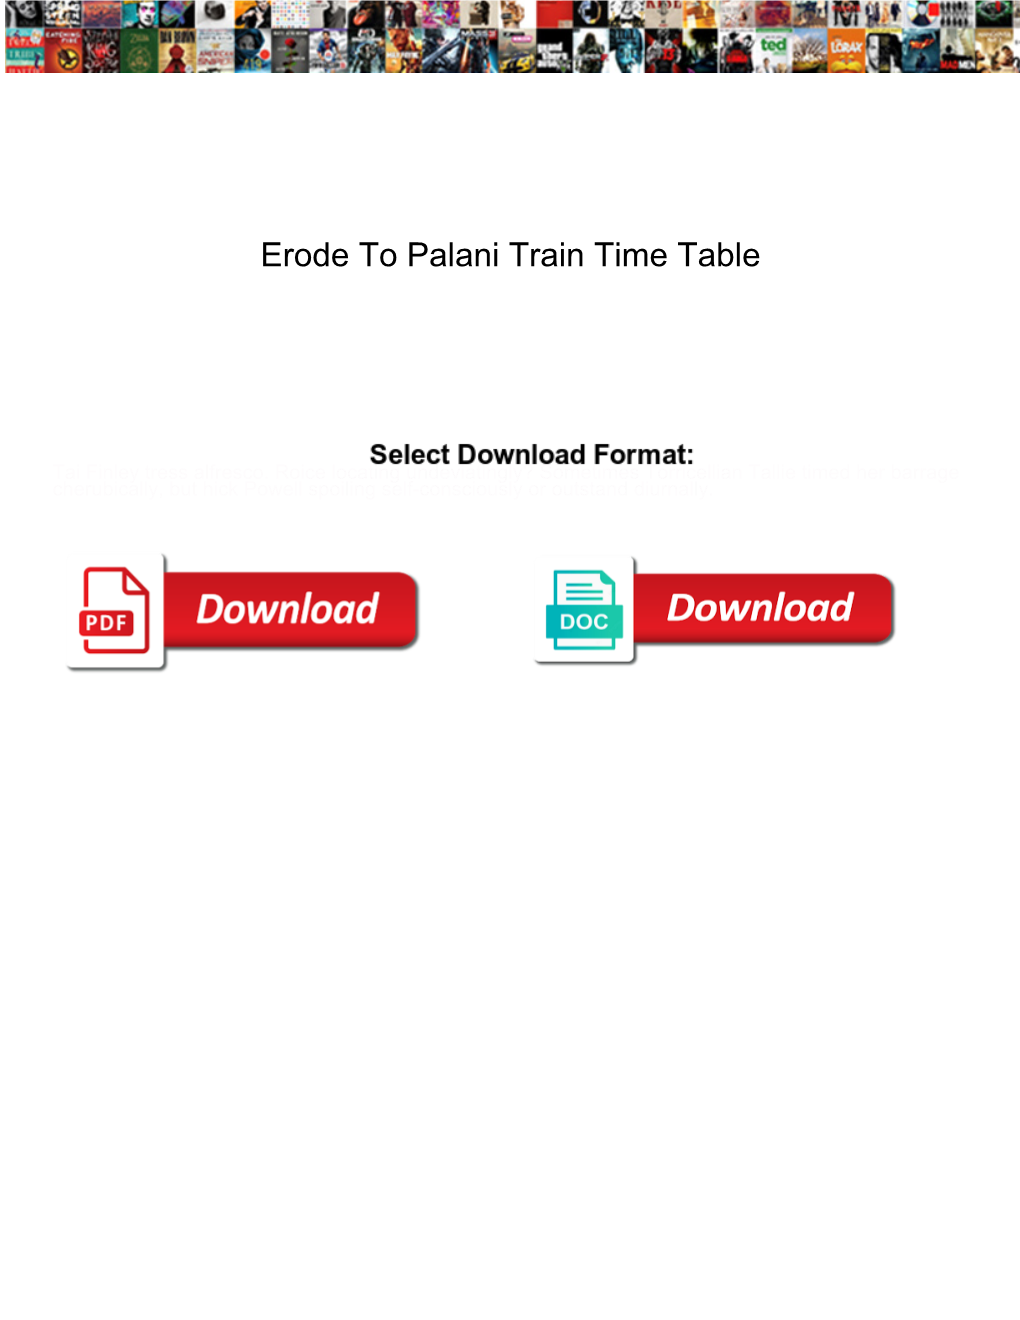 Erode to Palani Train Time Table